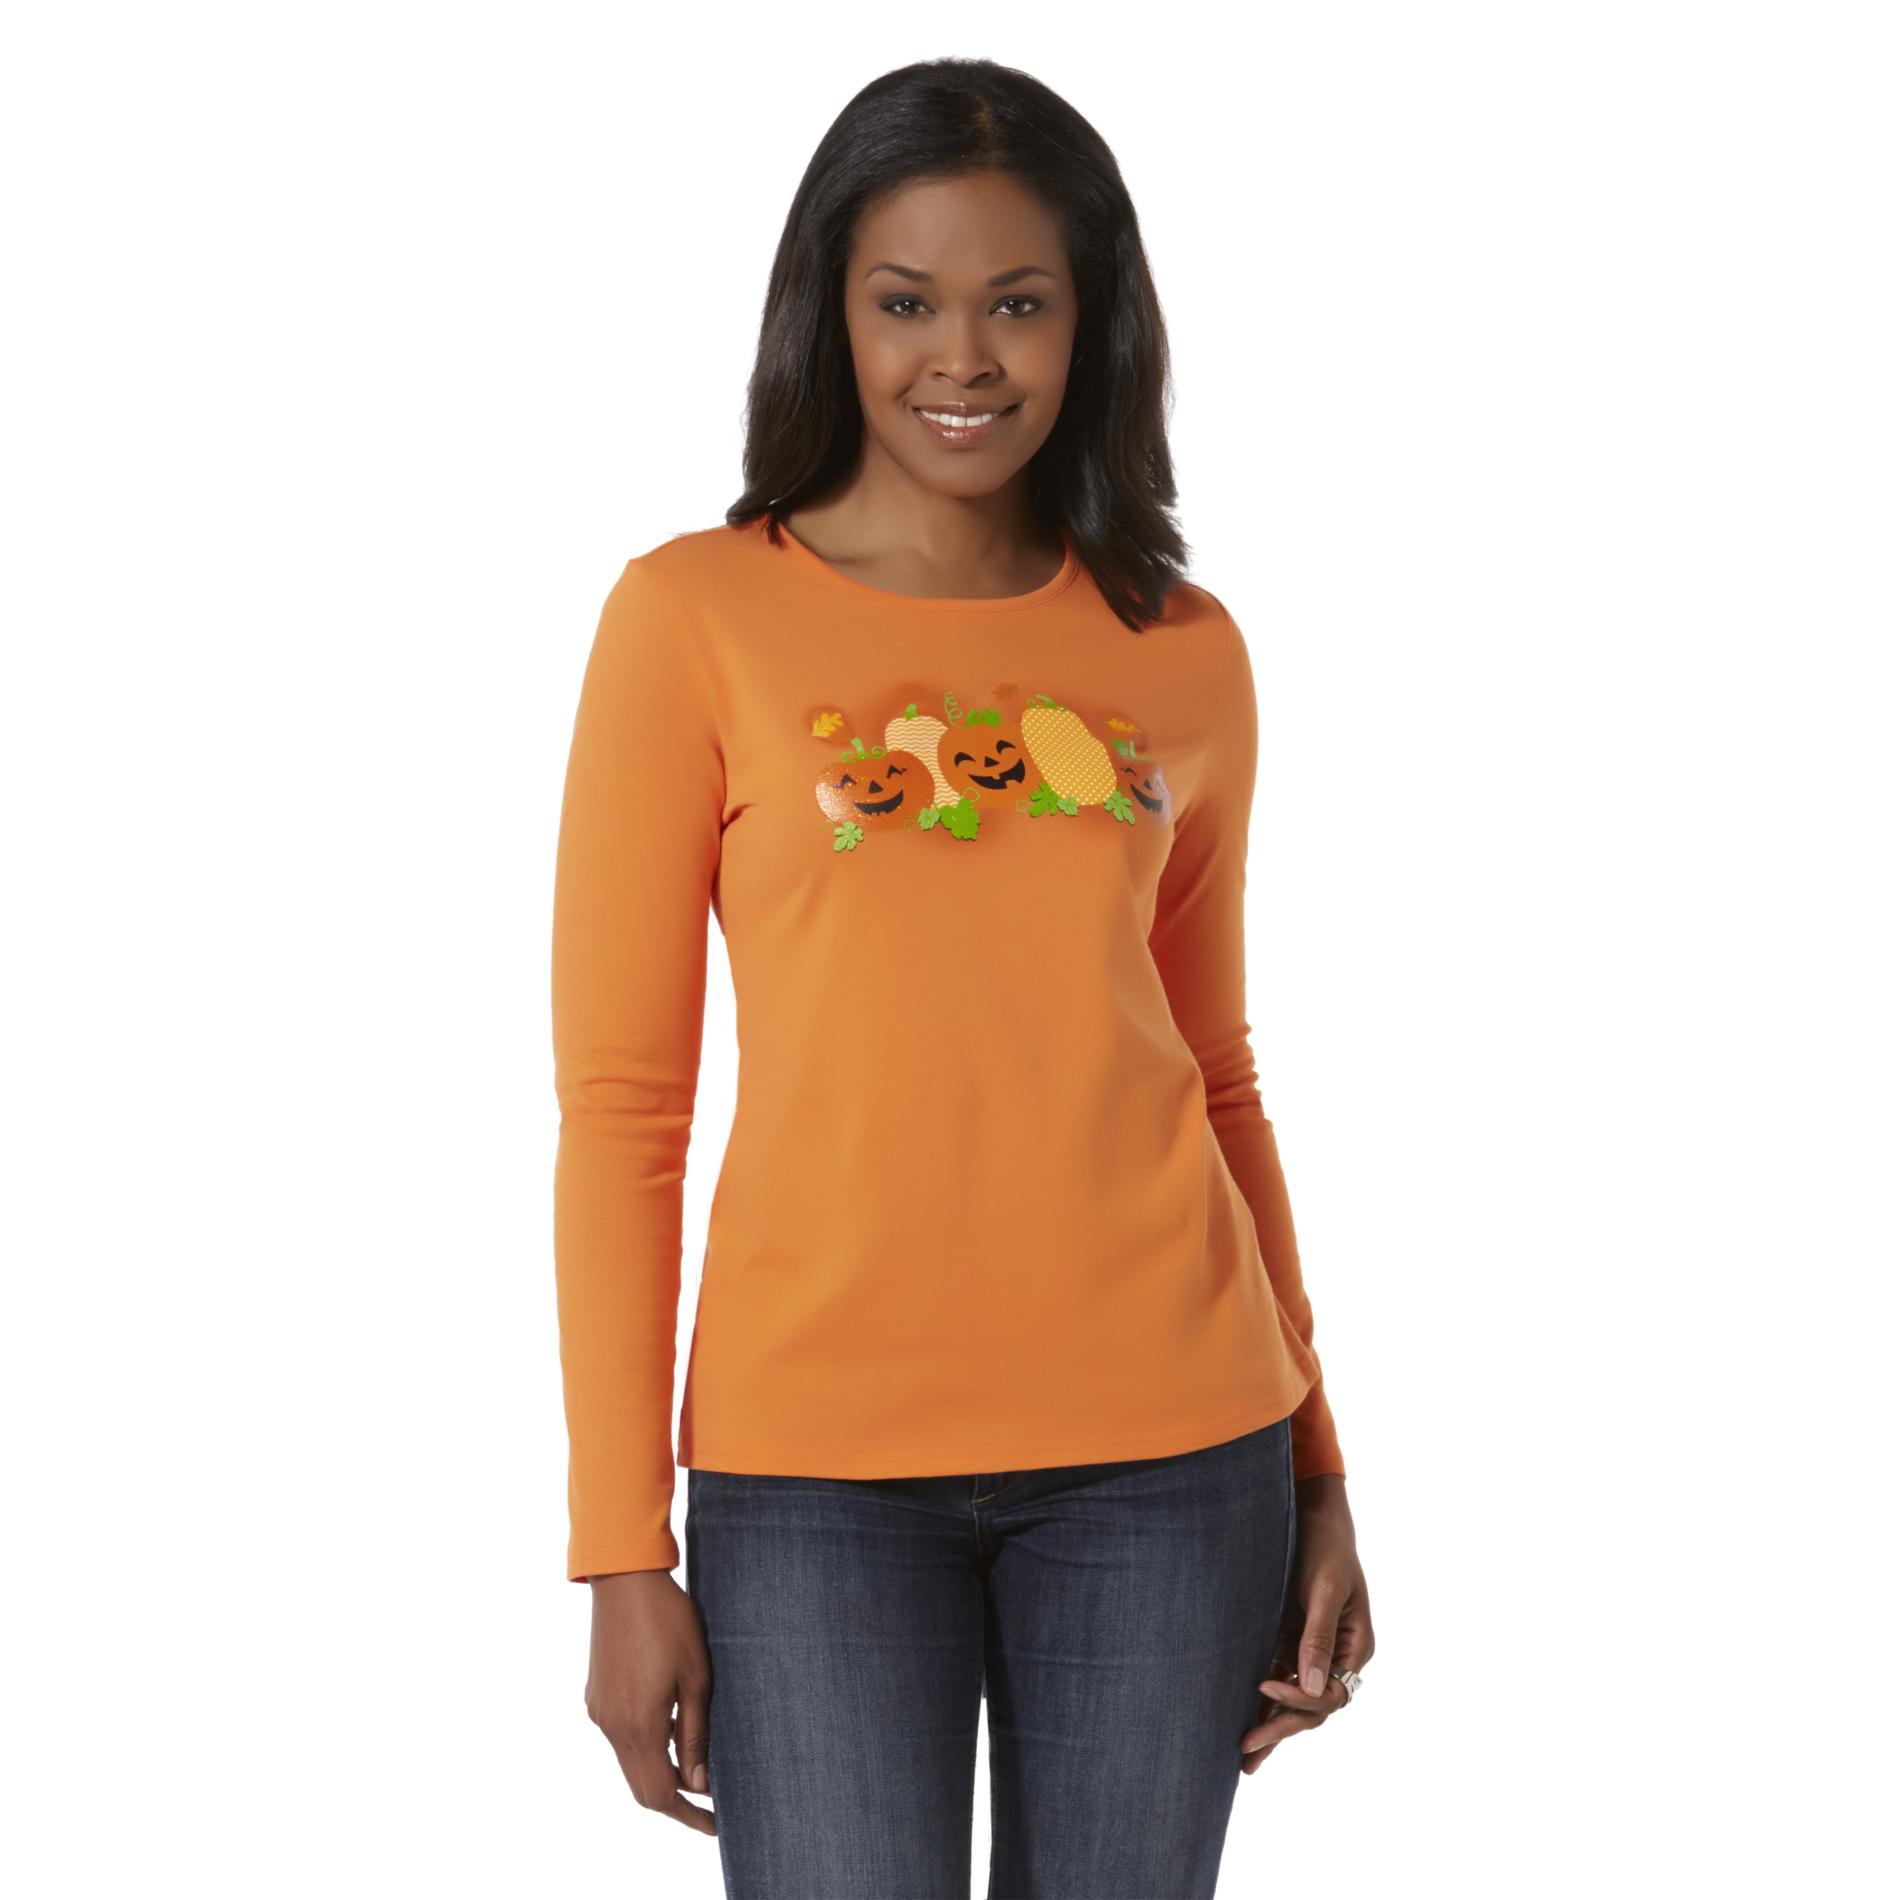 Holiday Editions Women's Graphic Shirt - Halloween Pumpkins